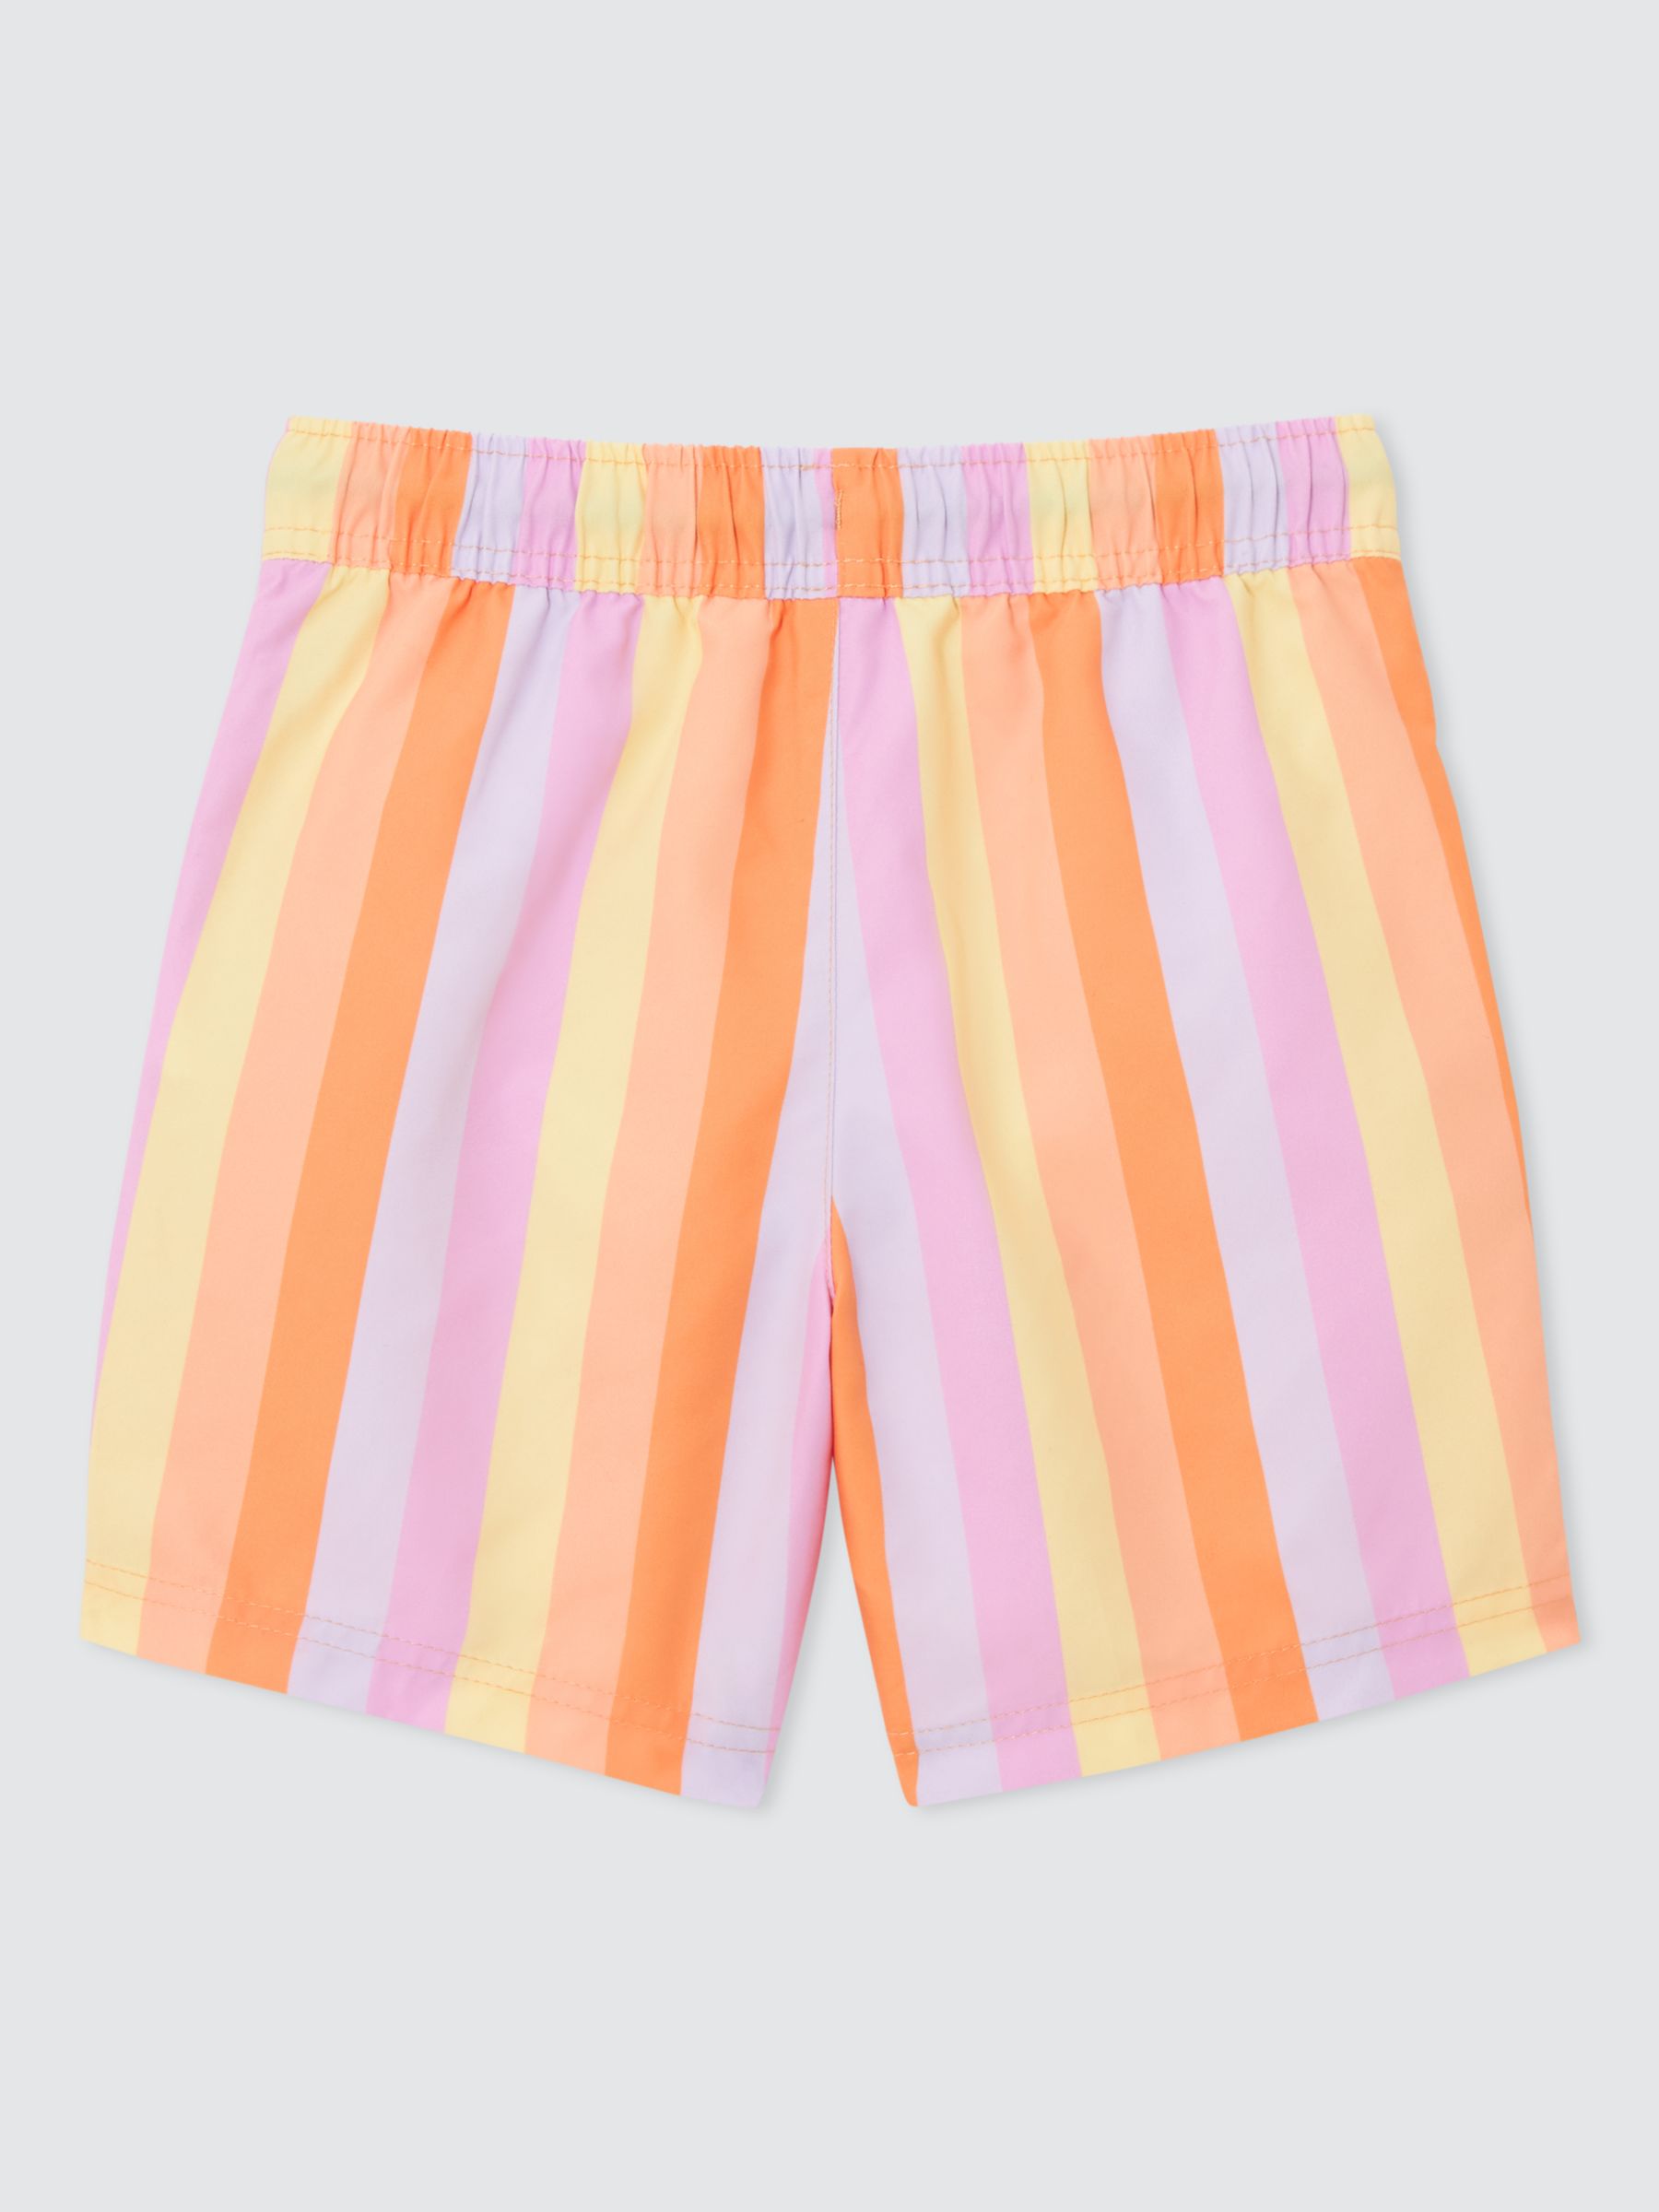 John Lewis ANYDAY Kids' Vertical Stripe Sunny Days Swim Shorts, Multi, 7 years